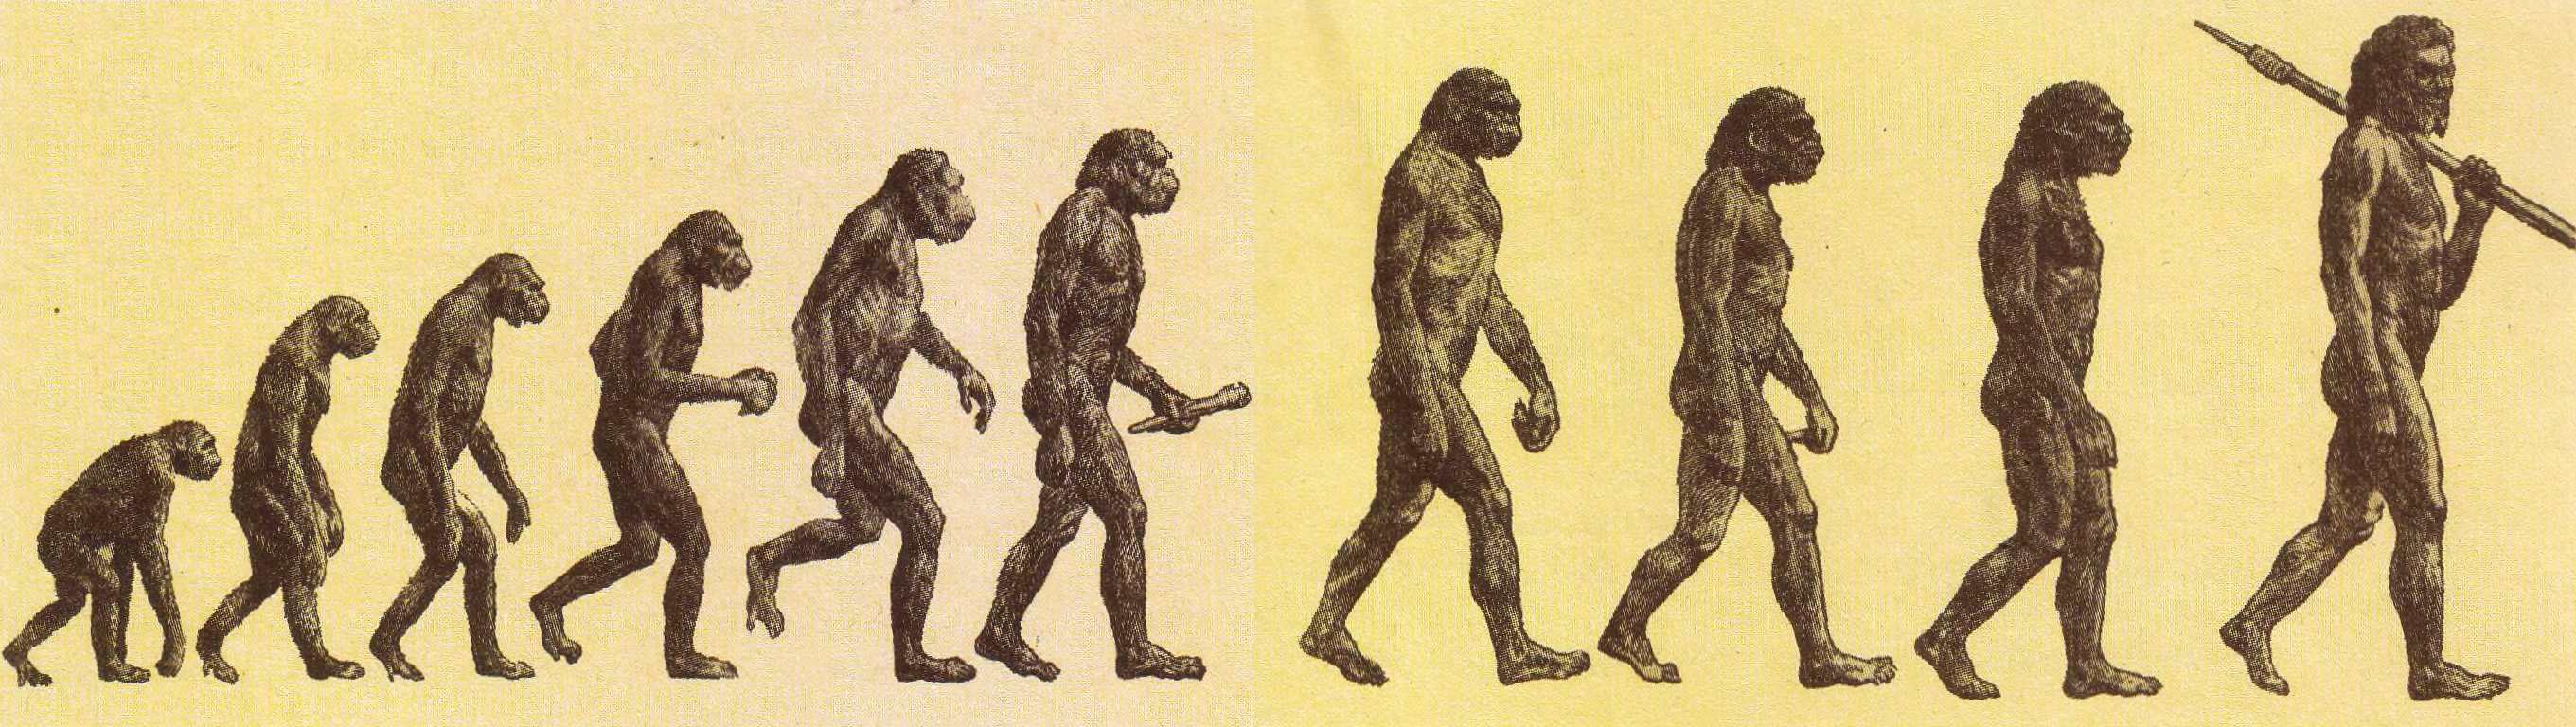 Как менялись древние люди. Теория эволюции Дарвина. Дарвин теория эволюции и происхождения человека. Теория Дарвина о происхождении человека.